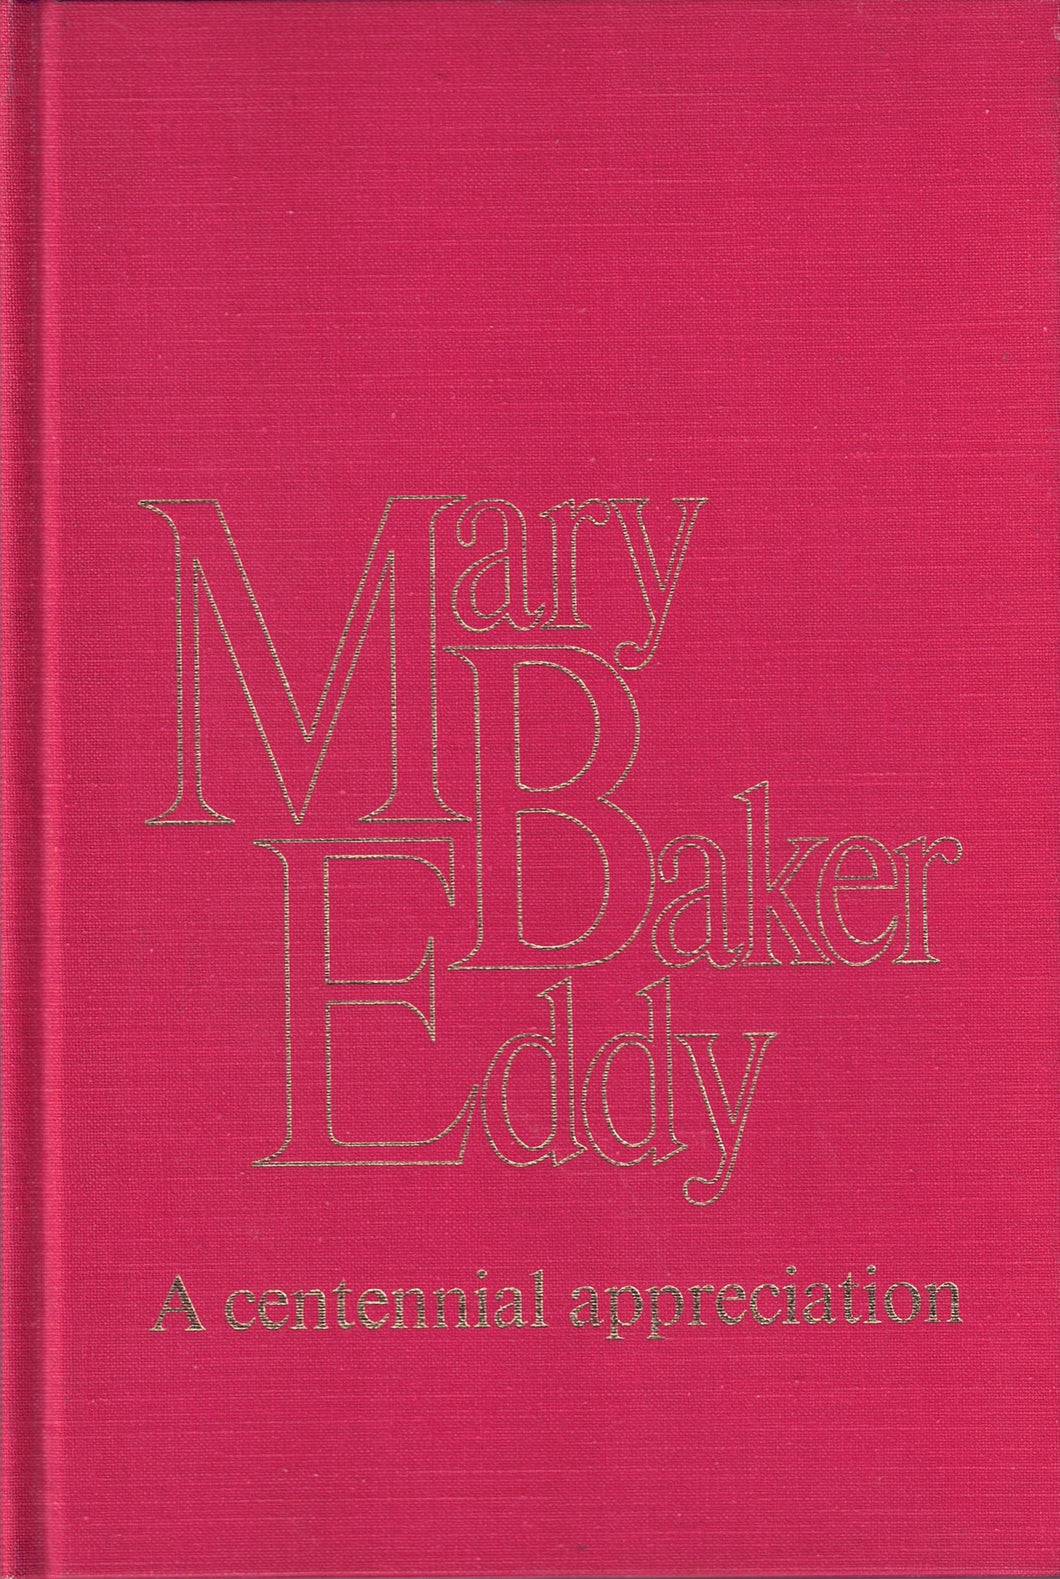 Mary Baker Eddy, A centennial appreciation